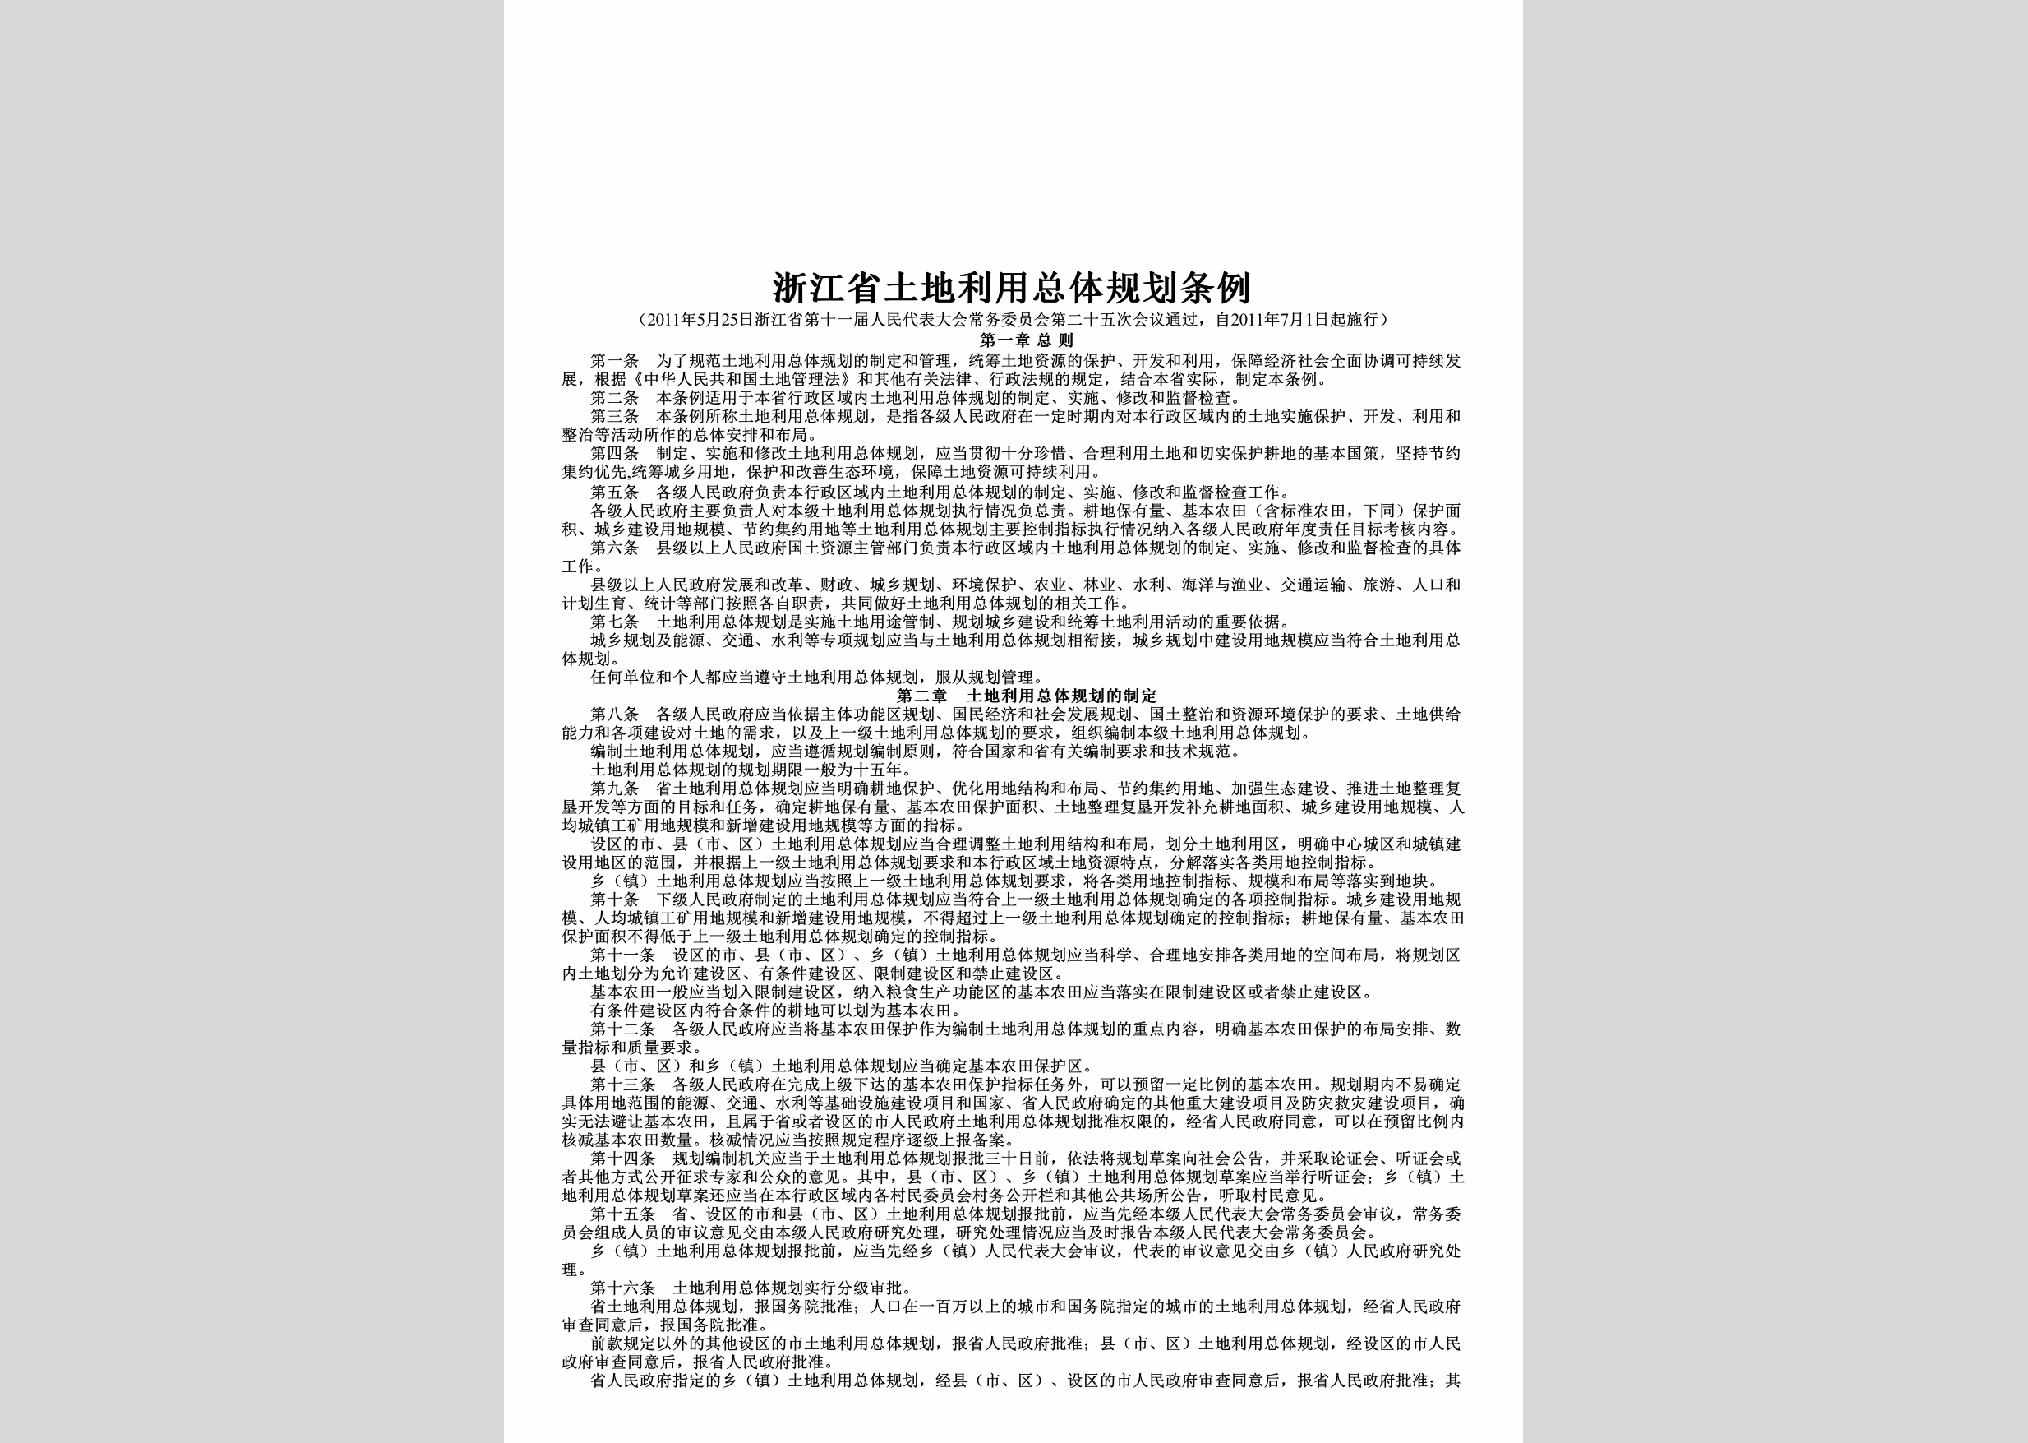 ZJ-TDLYZTGH-2011：浙江省土地利用总体规划条例